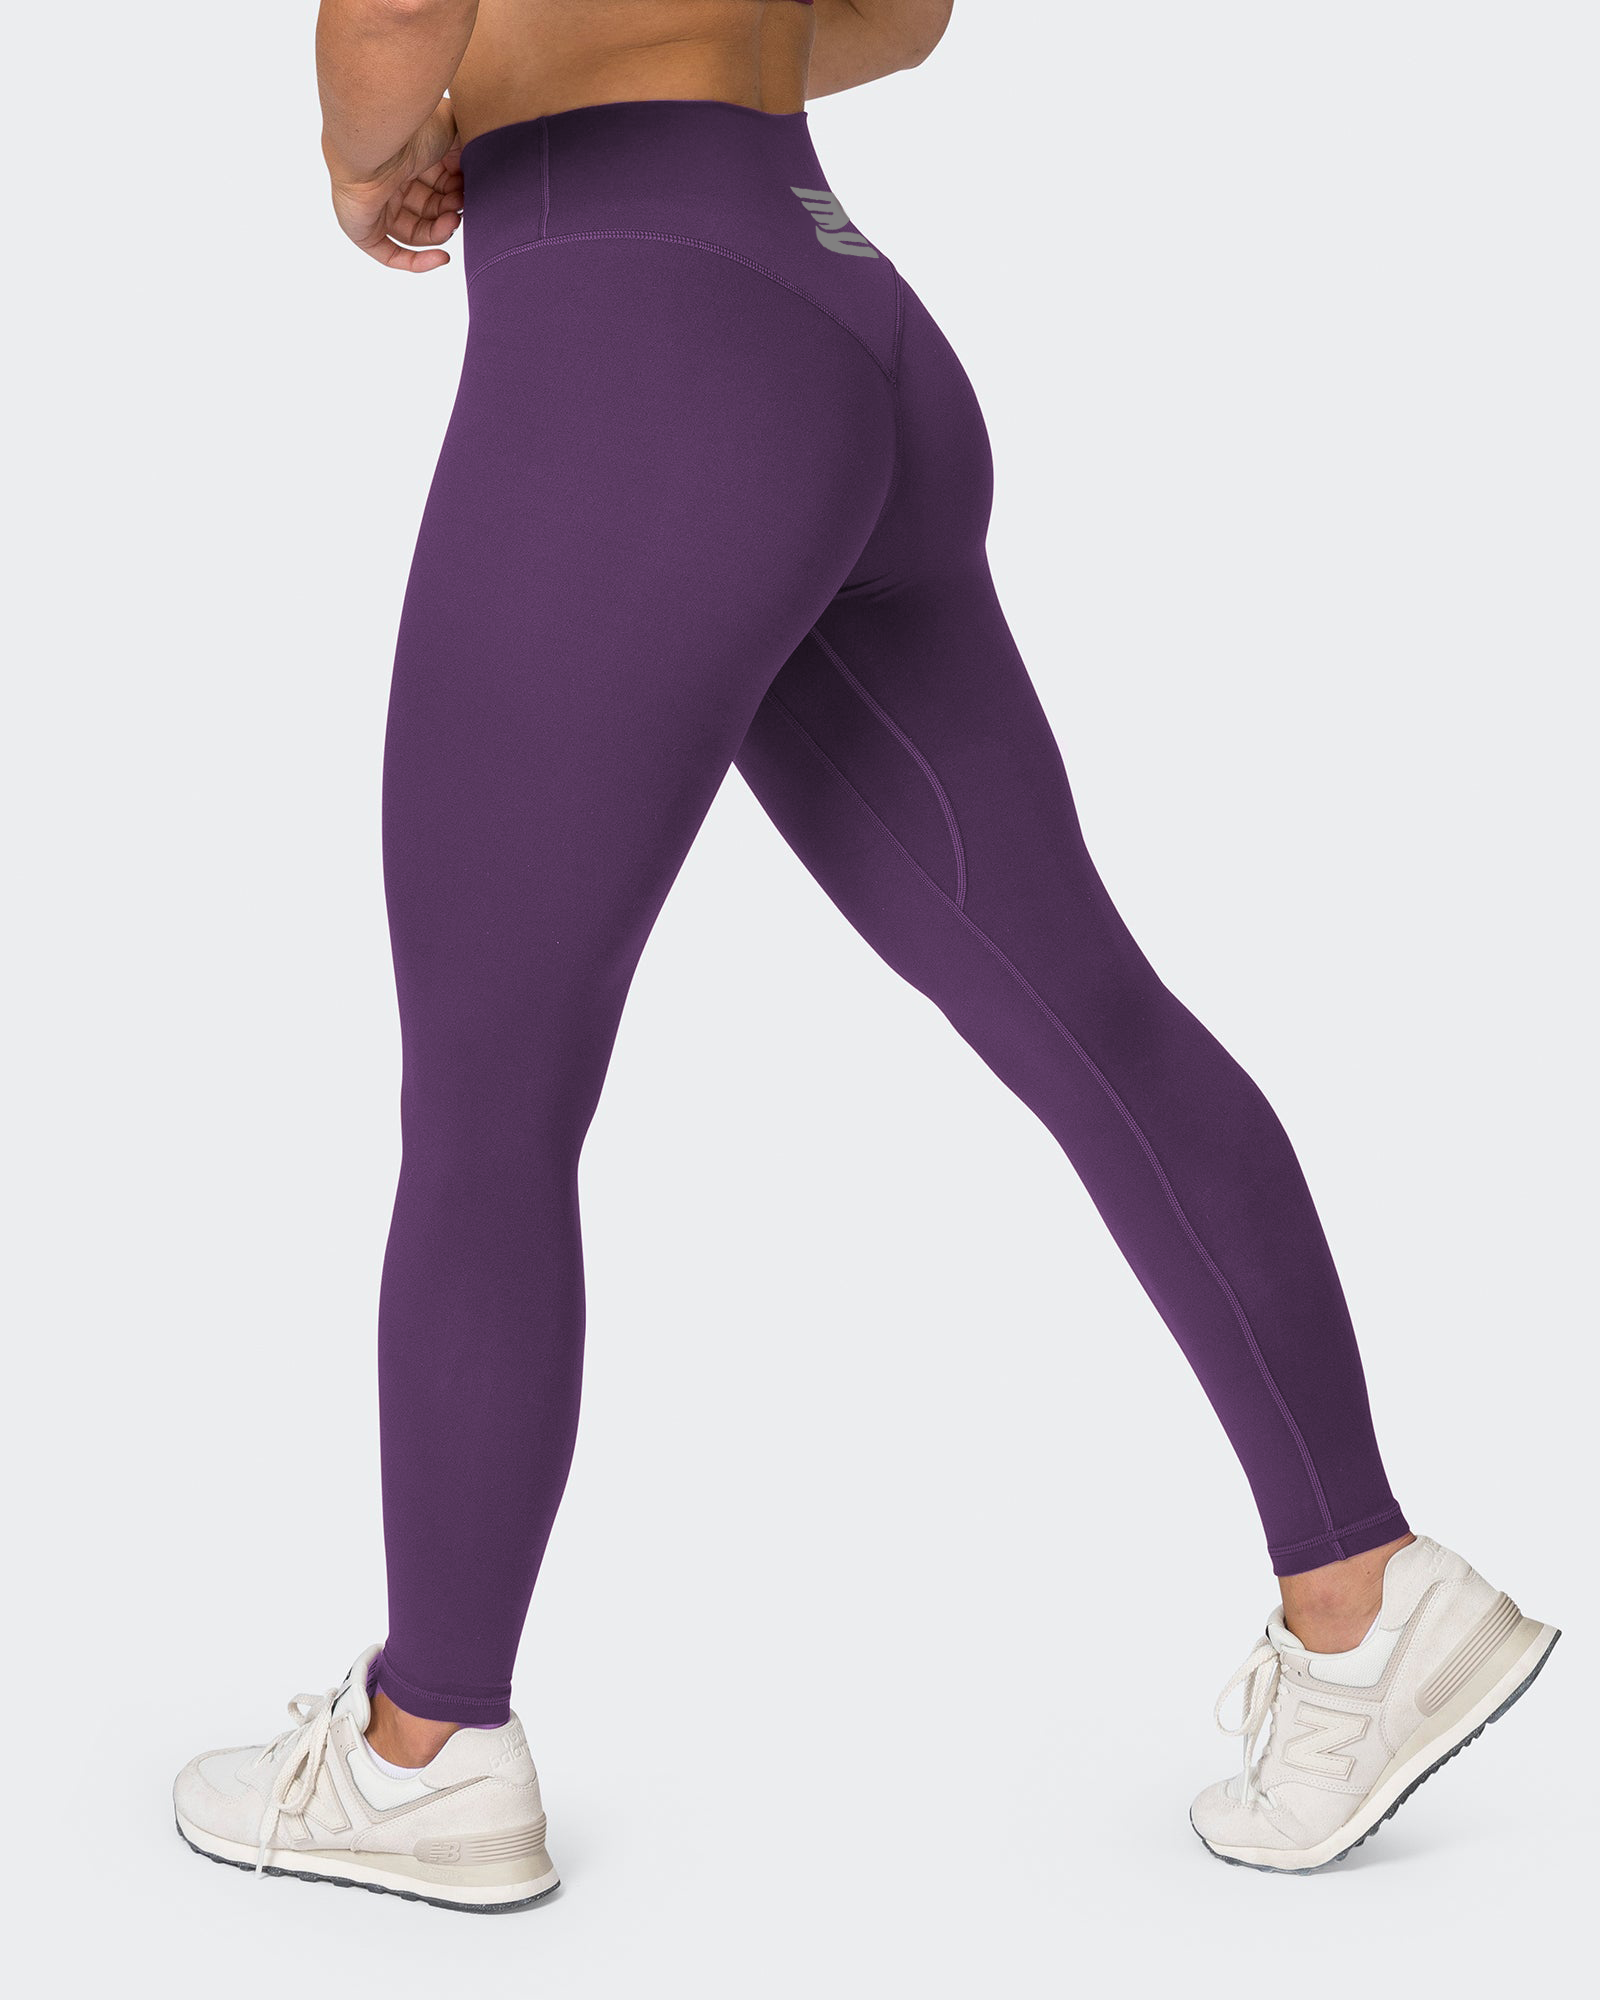 Top more than 120 best selling gymshark leggings super hot